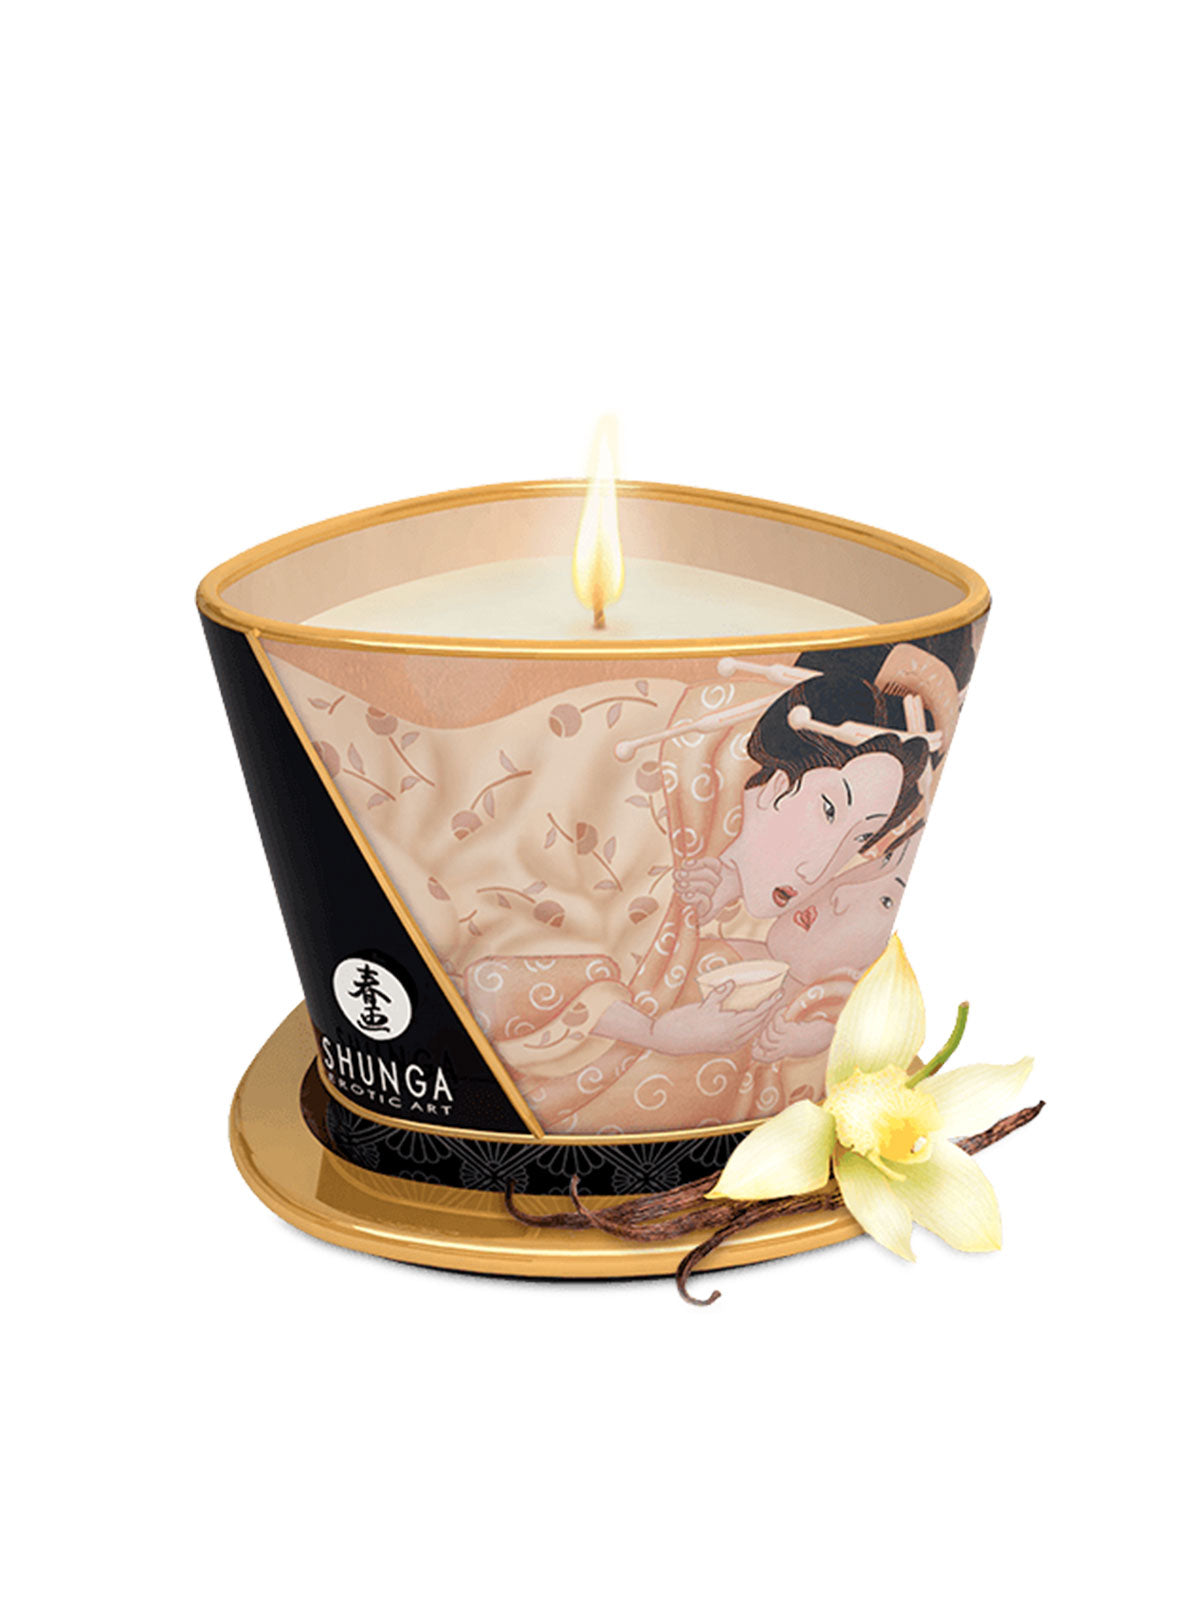 Vanilla Erotic Massage Candles by Shunga 